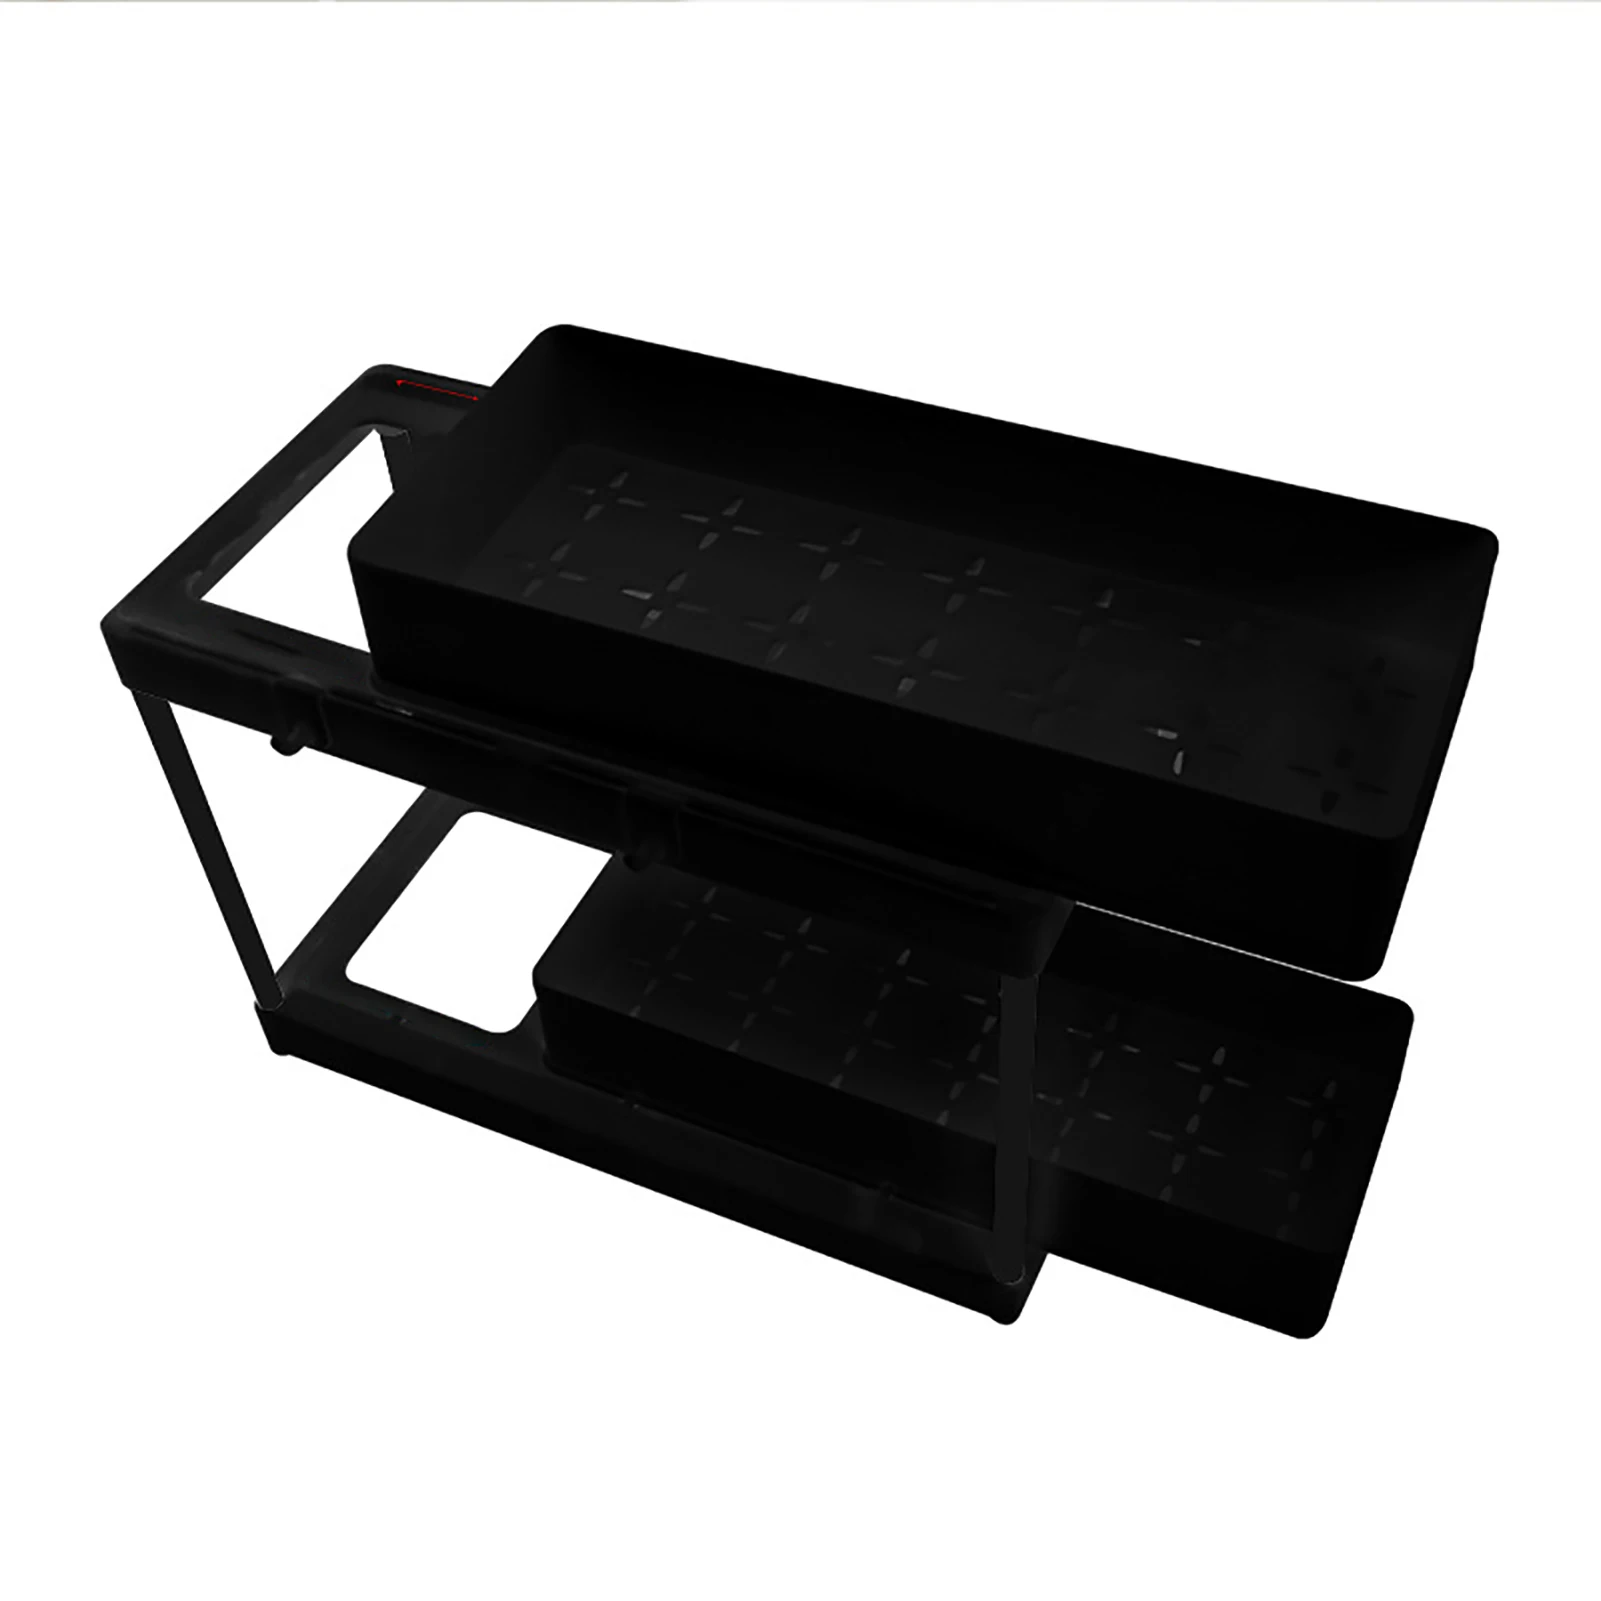 https://ae01.alicdn.com/kf/S3c79ac8d54154ee69c2b850f06ee5b14x/Under-Sink-Sliding-Drawer-Multi-Purpose-Countertop-Pull-Out-Organizer-Cabinet-Storage-Baskets-For-Kitchen-Bathroom.jpg